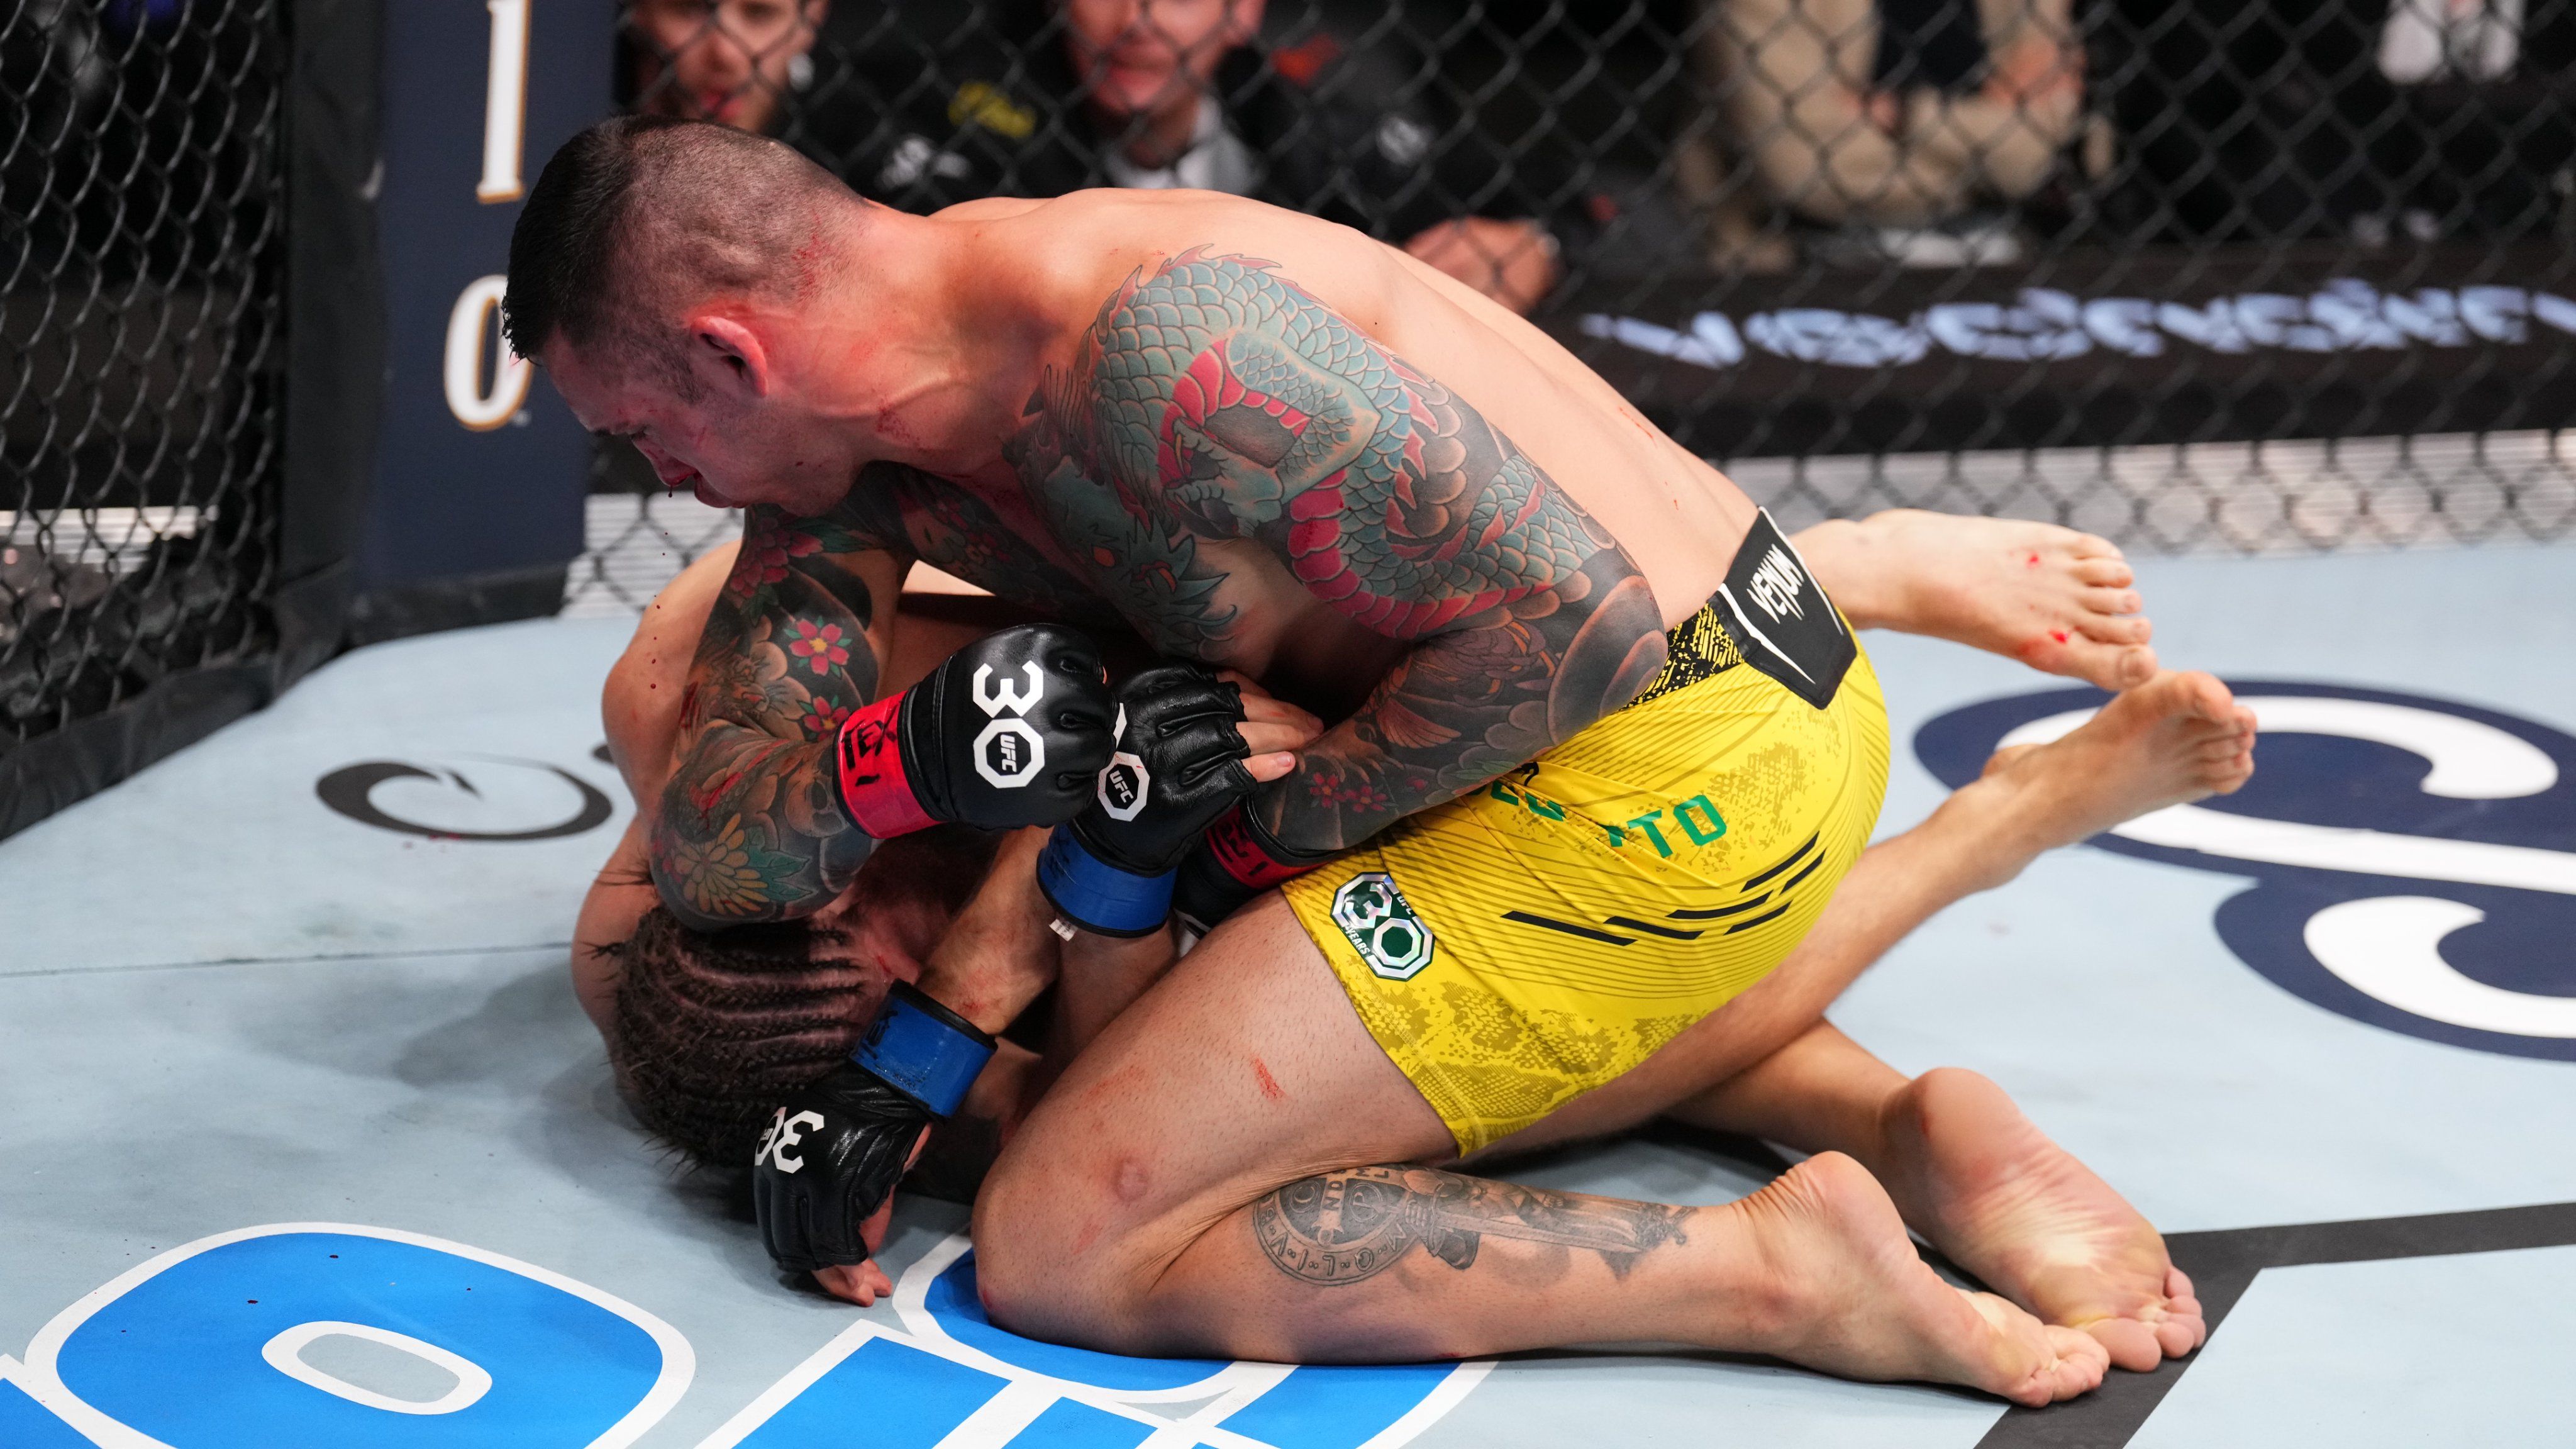 Український боєць Потеря програв нокаутом у бою з дебютантом UFC: відео - 24 канал Спорт